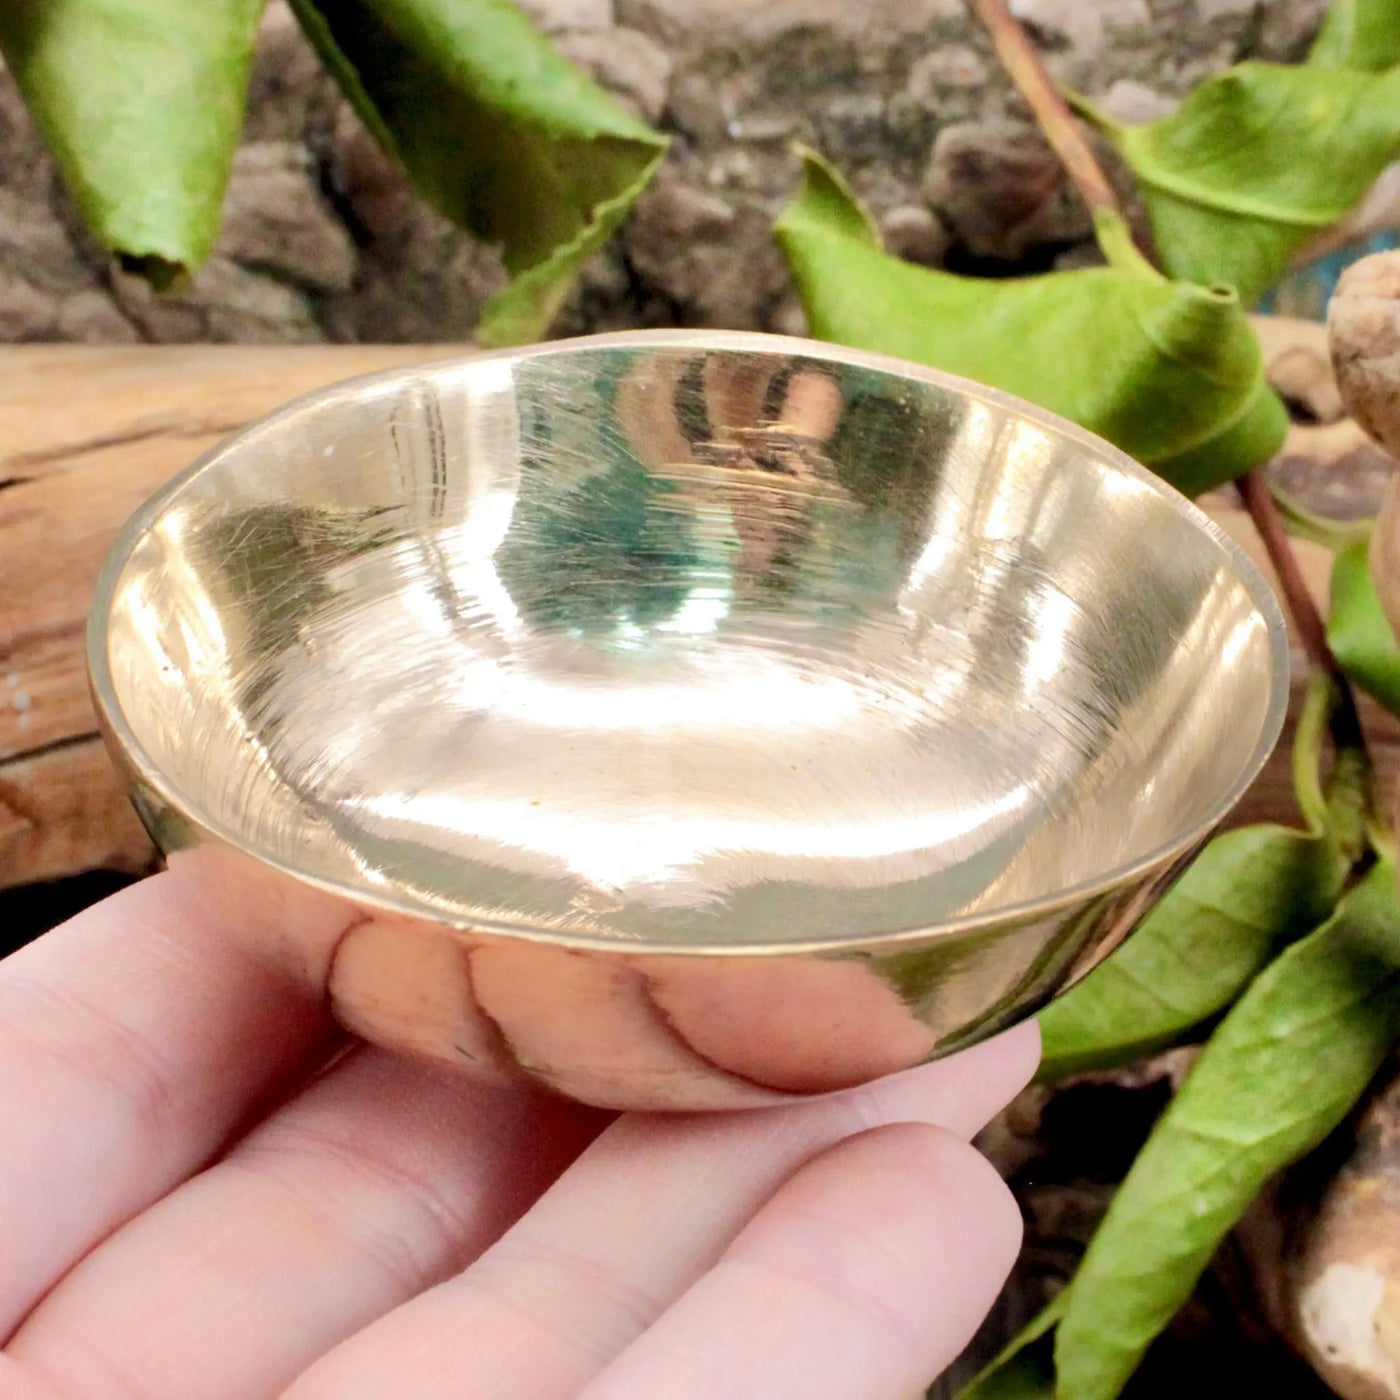 Brass Bowl - Small